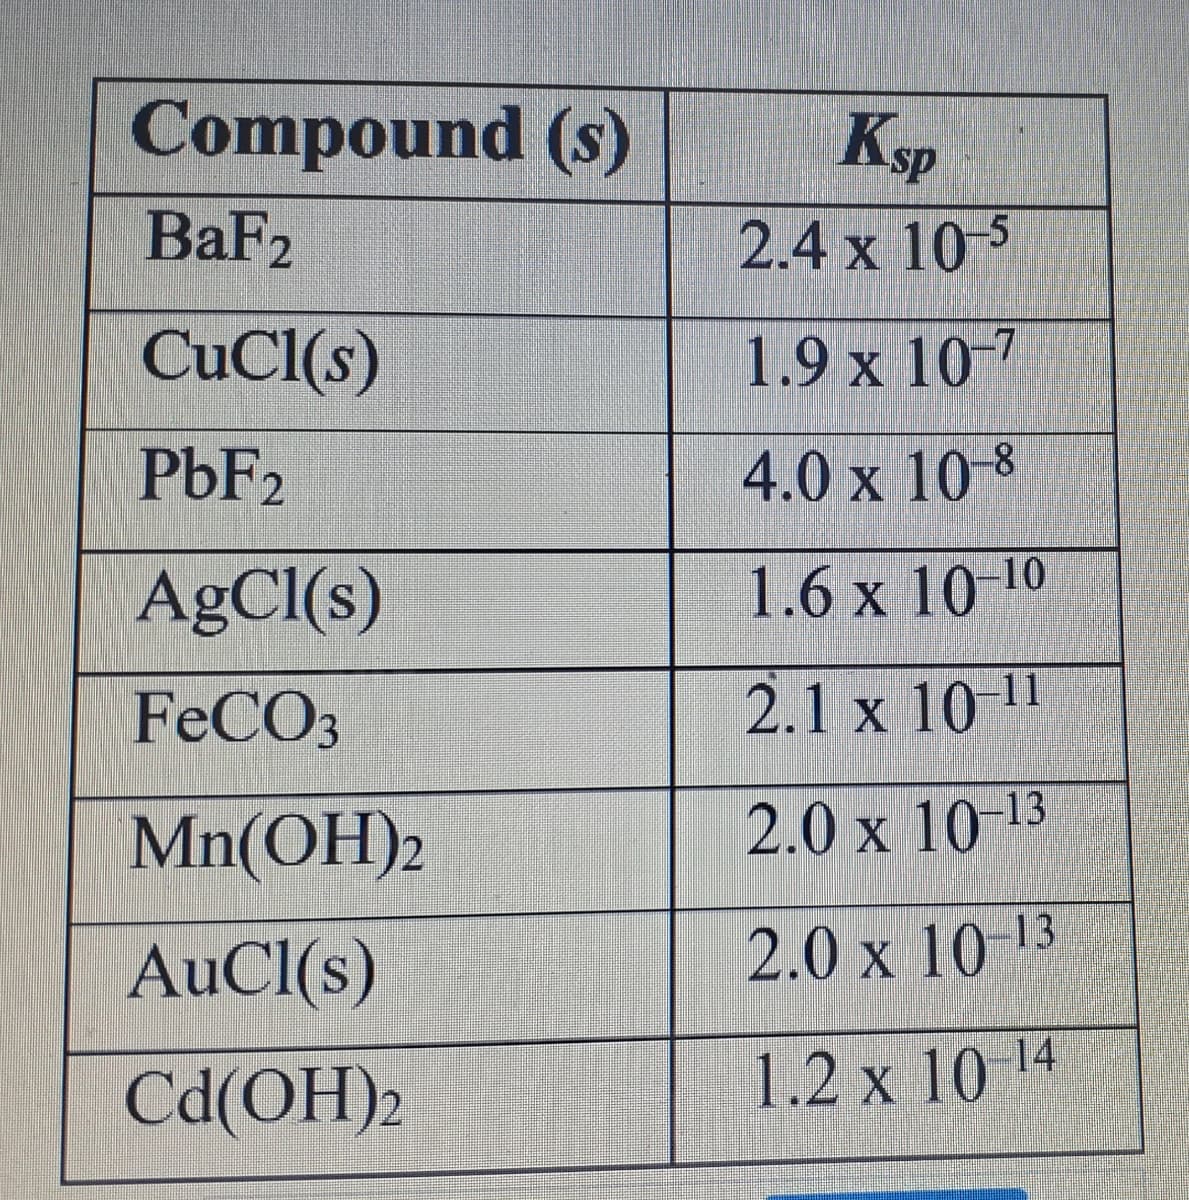 Compound (s)
BaF2
CuCl(s)
PbF2
AgCl(s)
FeCO3
Mn(OH)2
AuCl(s)
Cd(OH)2
Ksp
2.4 x 10-5
1.9 x 10-7
4.0 x 10-8
1.6 x 10-10
2.1 x 10-11
2.0 x 10-13
2.0 x 10-13
1.2 x 10–¹4